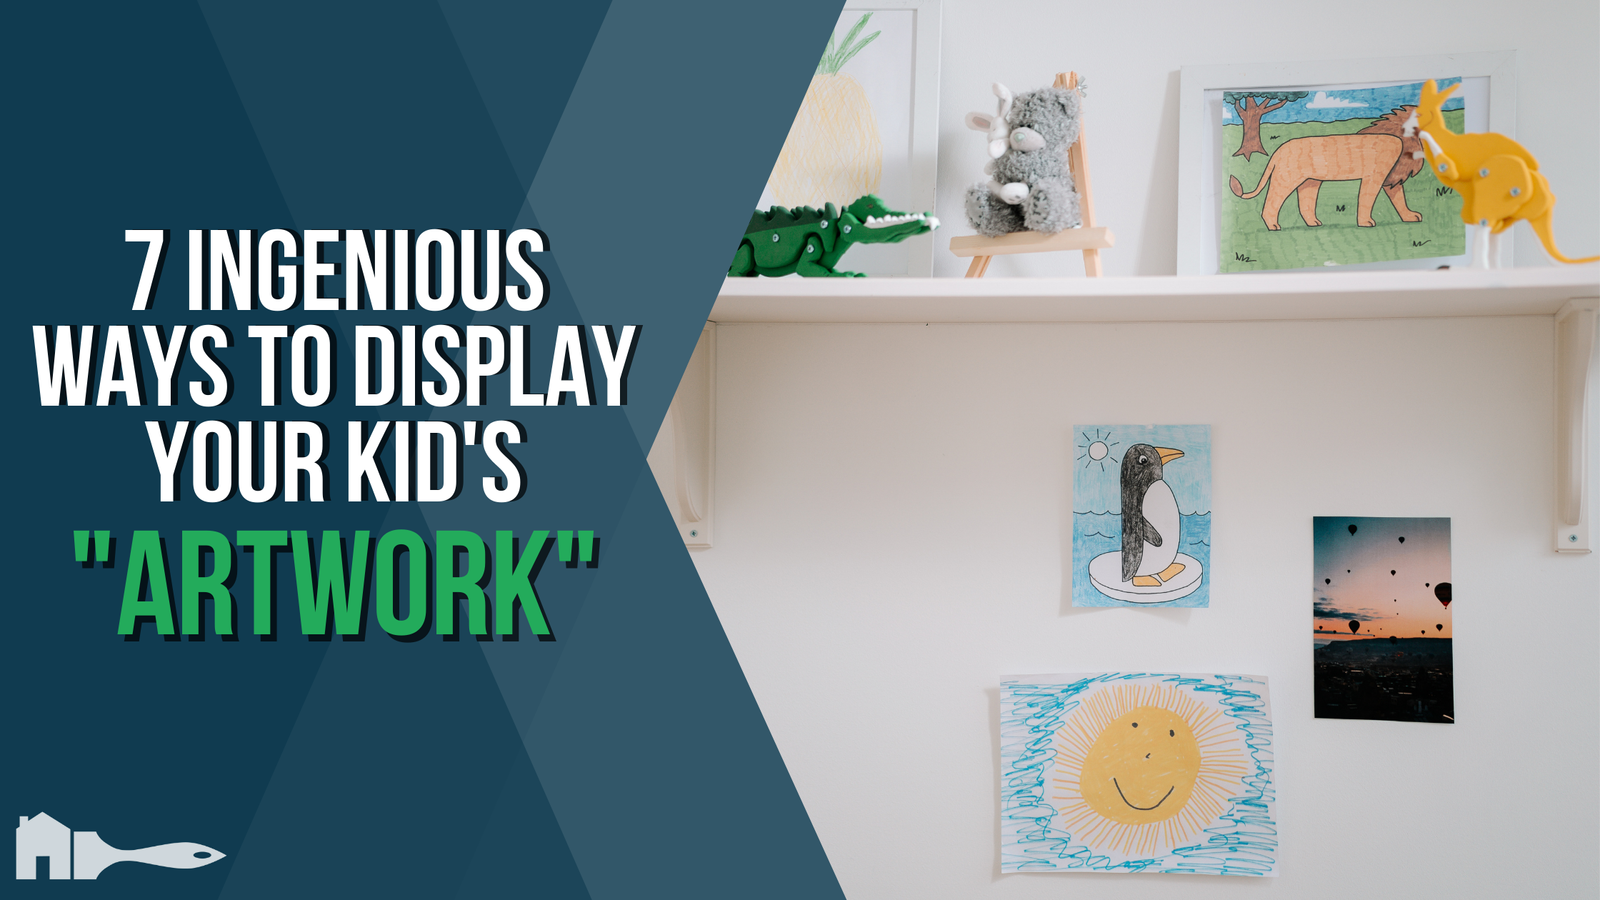 12 Genius Kids' Artwork Display Ideas - Mommyhooding